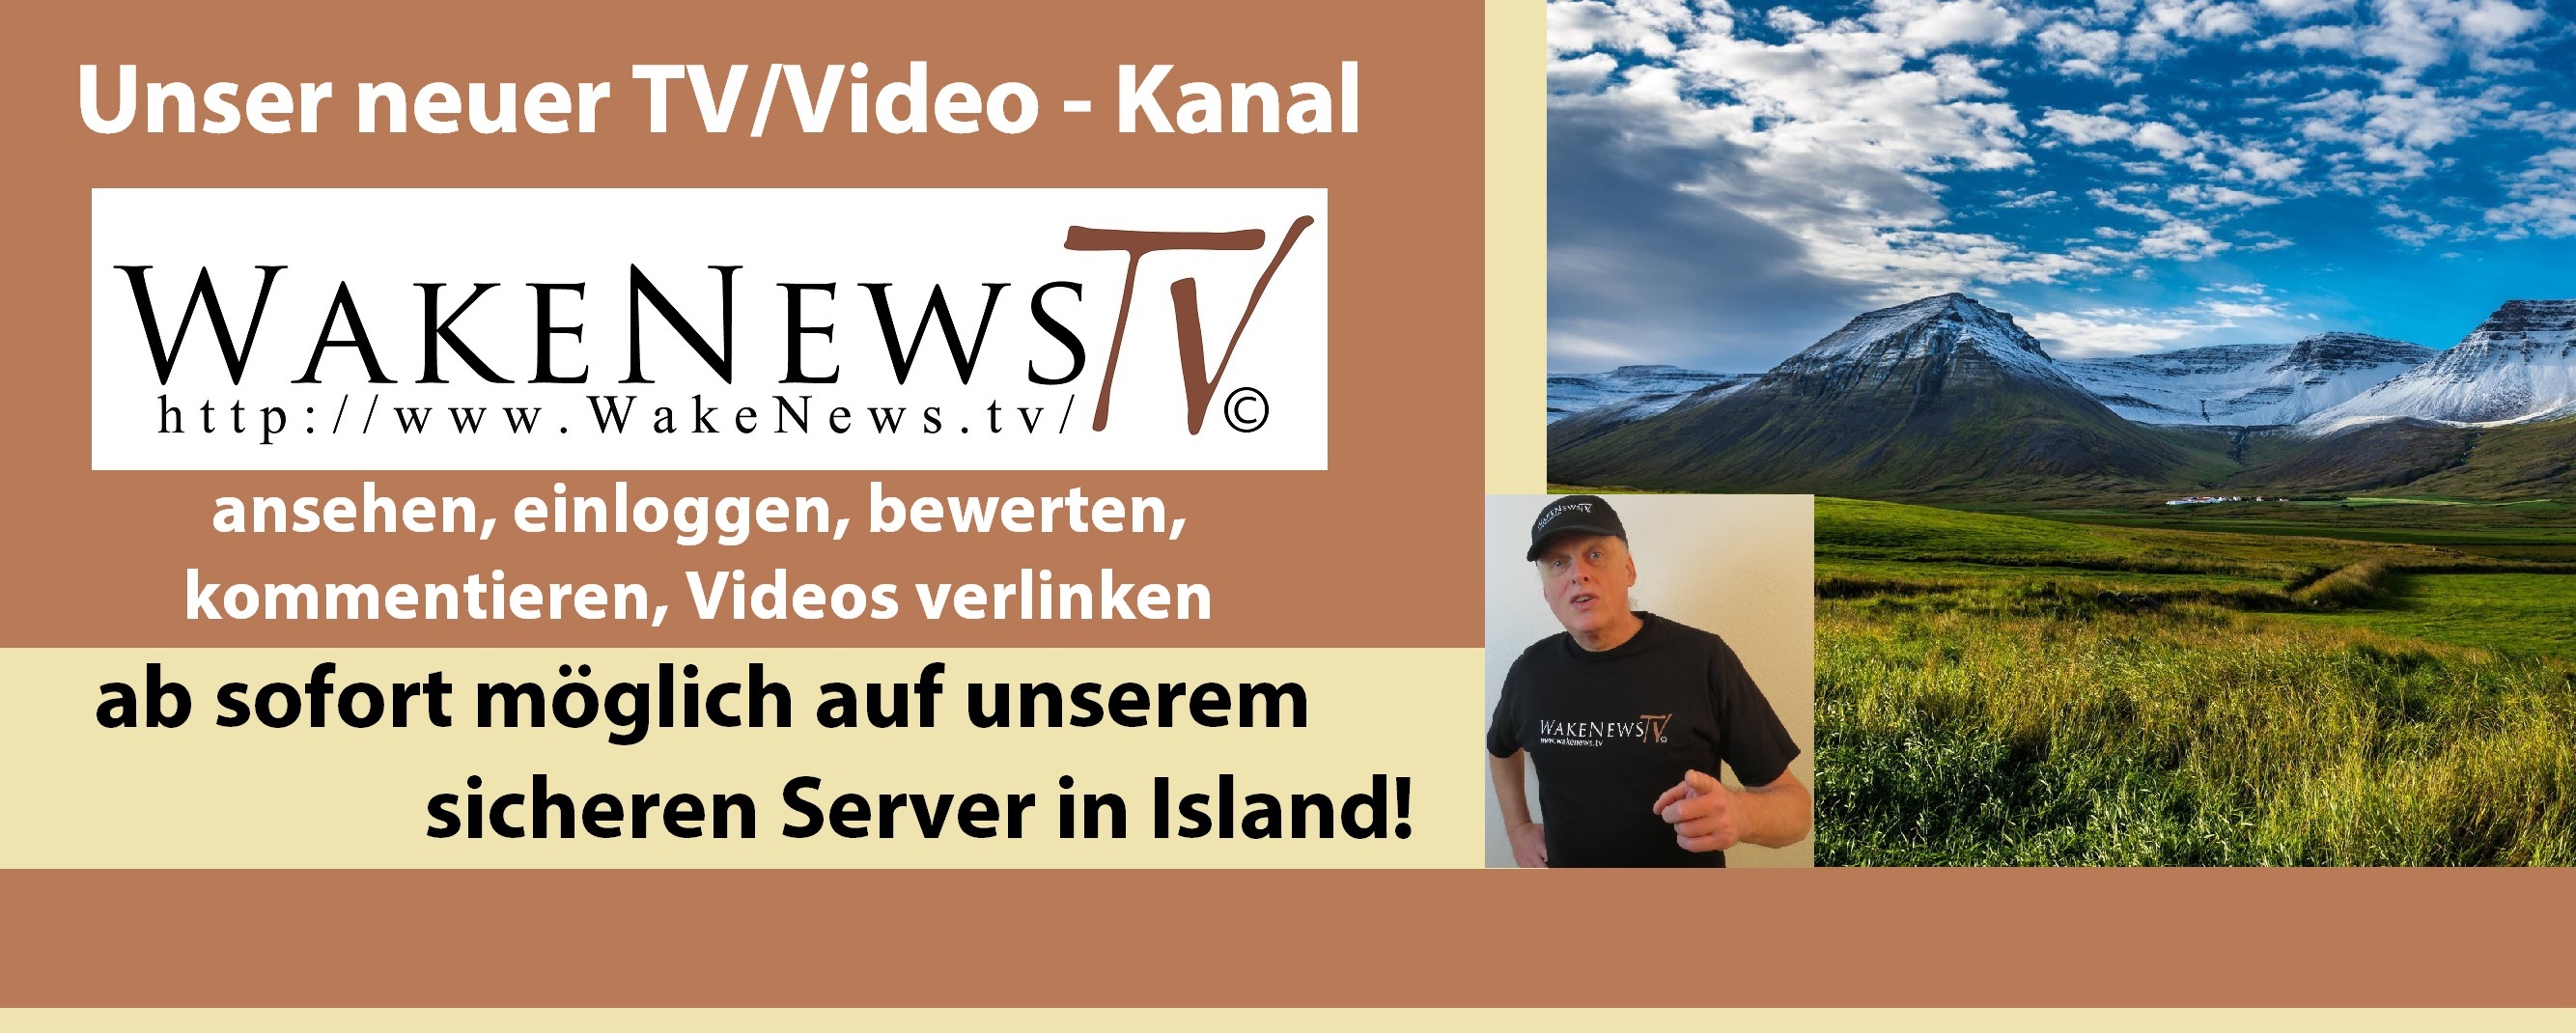 Unser Neuer TV-Video-Kanal Wake News TV in Island